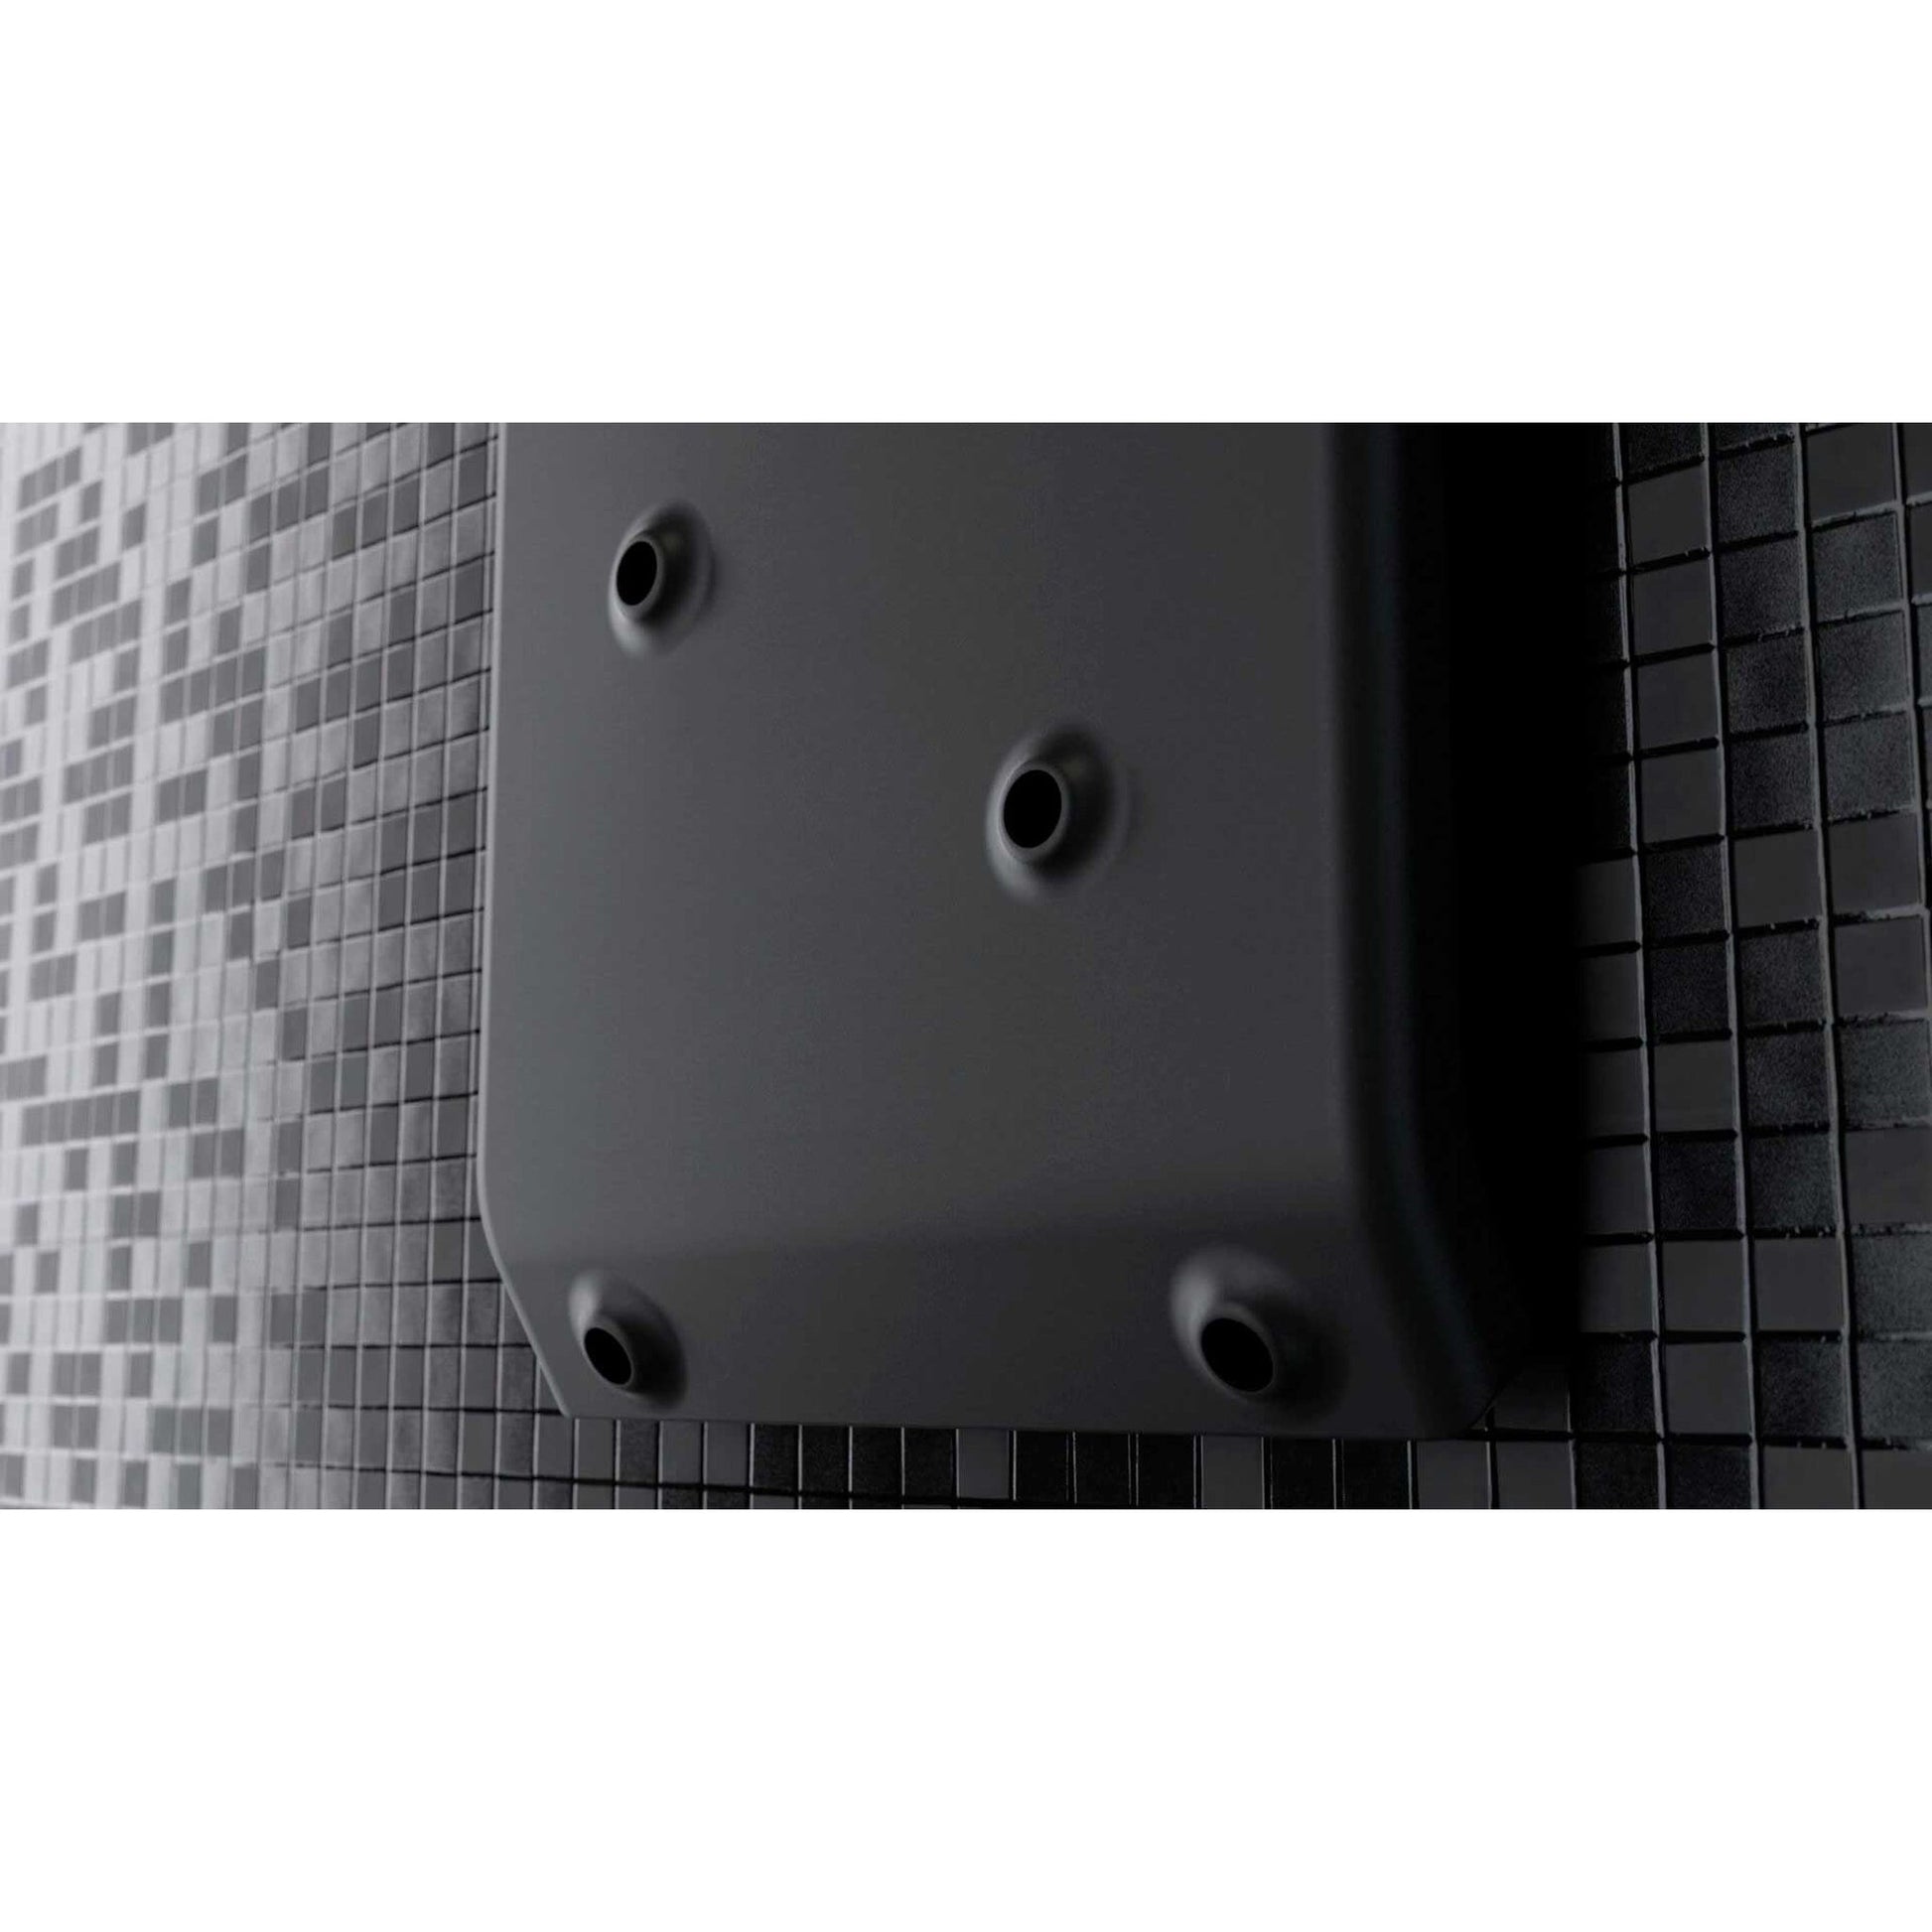 Valiryo - Body dryer - Black - Shower - Bathroom - Easy Care Systems